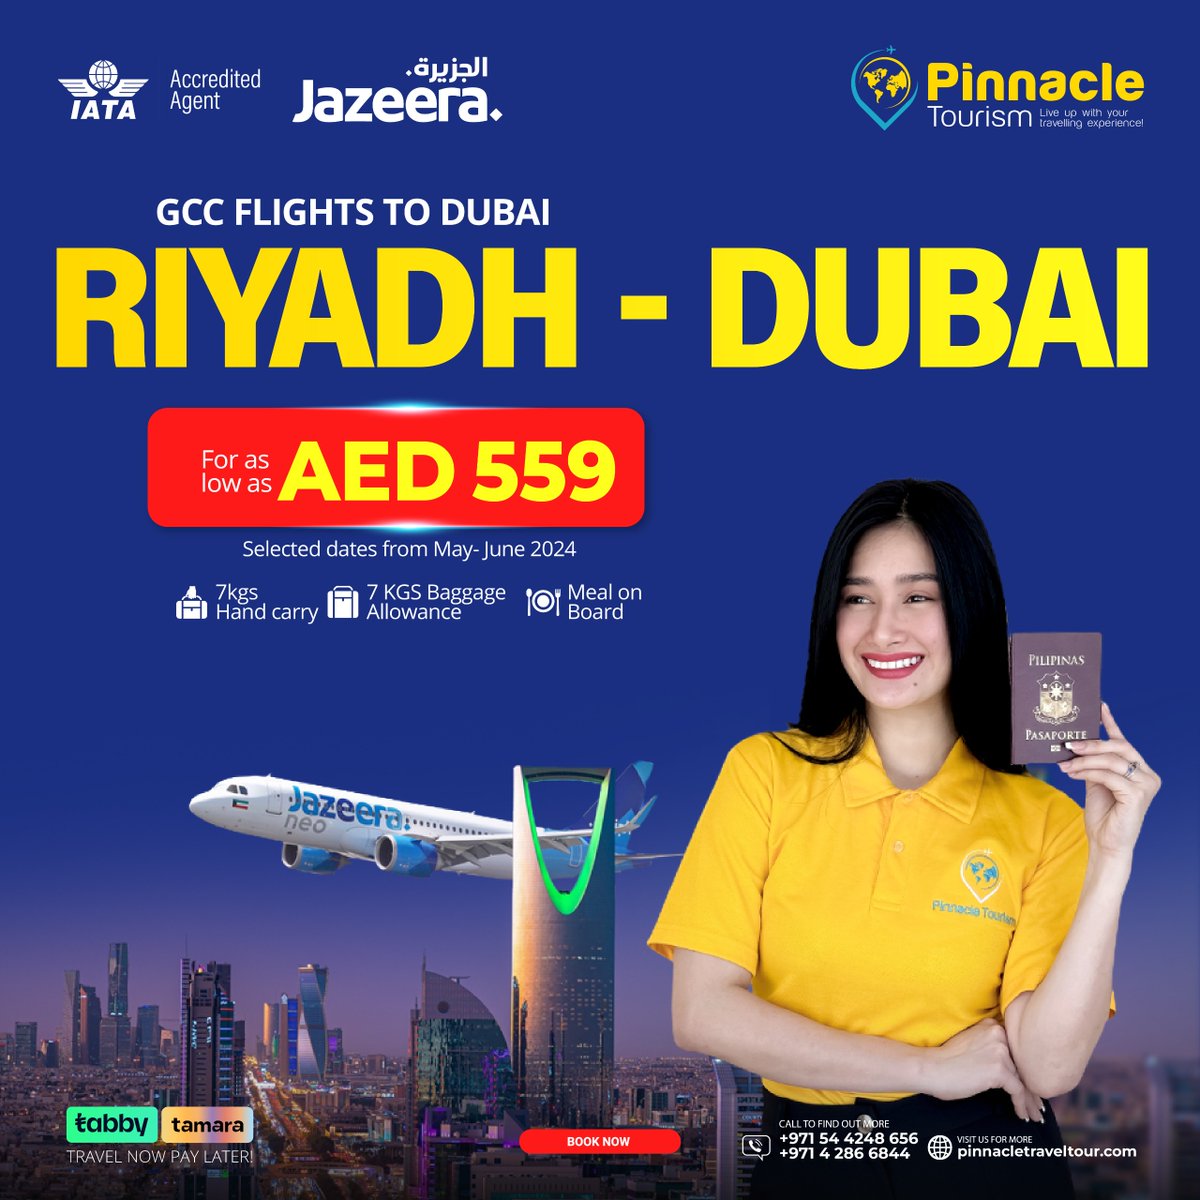 Ready for affordable travel? Book your Riyadh to Dubai flight ticket now with Pinnacle Tourism for just 559 AED! 

☎️042866844
📲0544248656
📧inquiries@pinnacletraveltour.com

#RiyadhToDubai #FlightDeals #PinnacleTourism #TravelWithPinnacle #LowFare #BudgetTravel #ExploreDubai